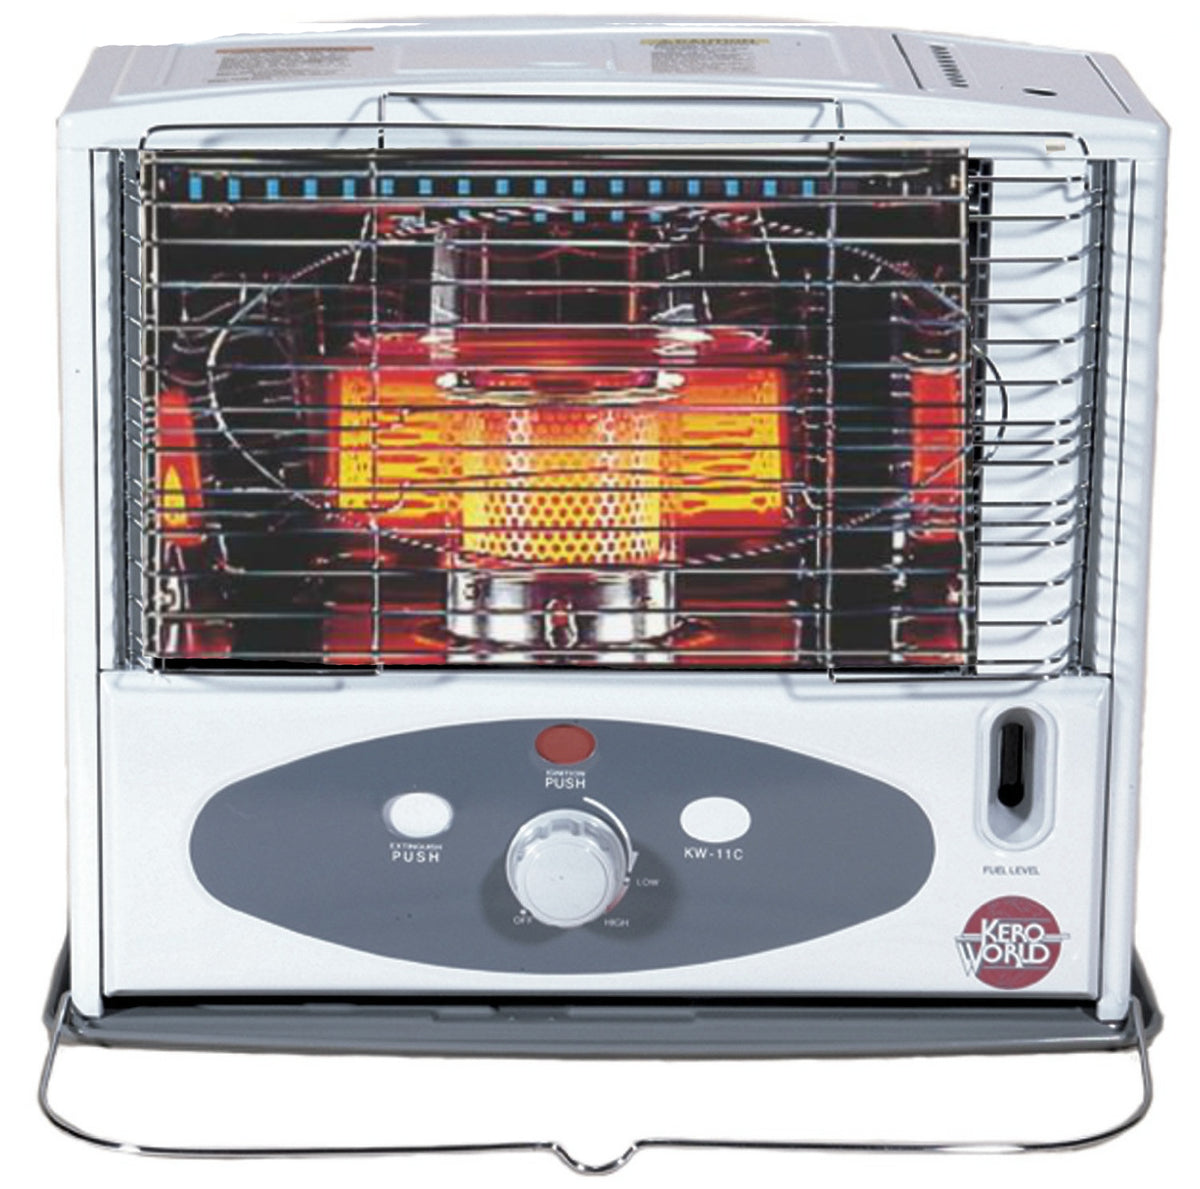 buy kerosene heaters at cheap rate in bulk. wholesale & retail bulk heater & coolers store.